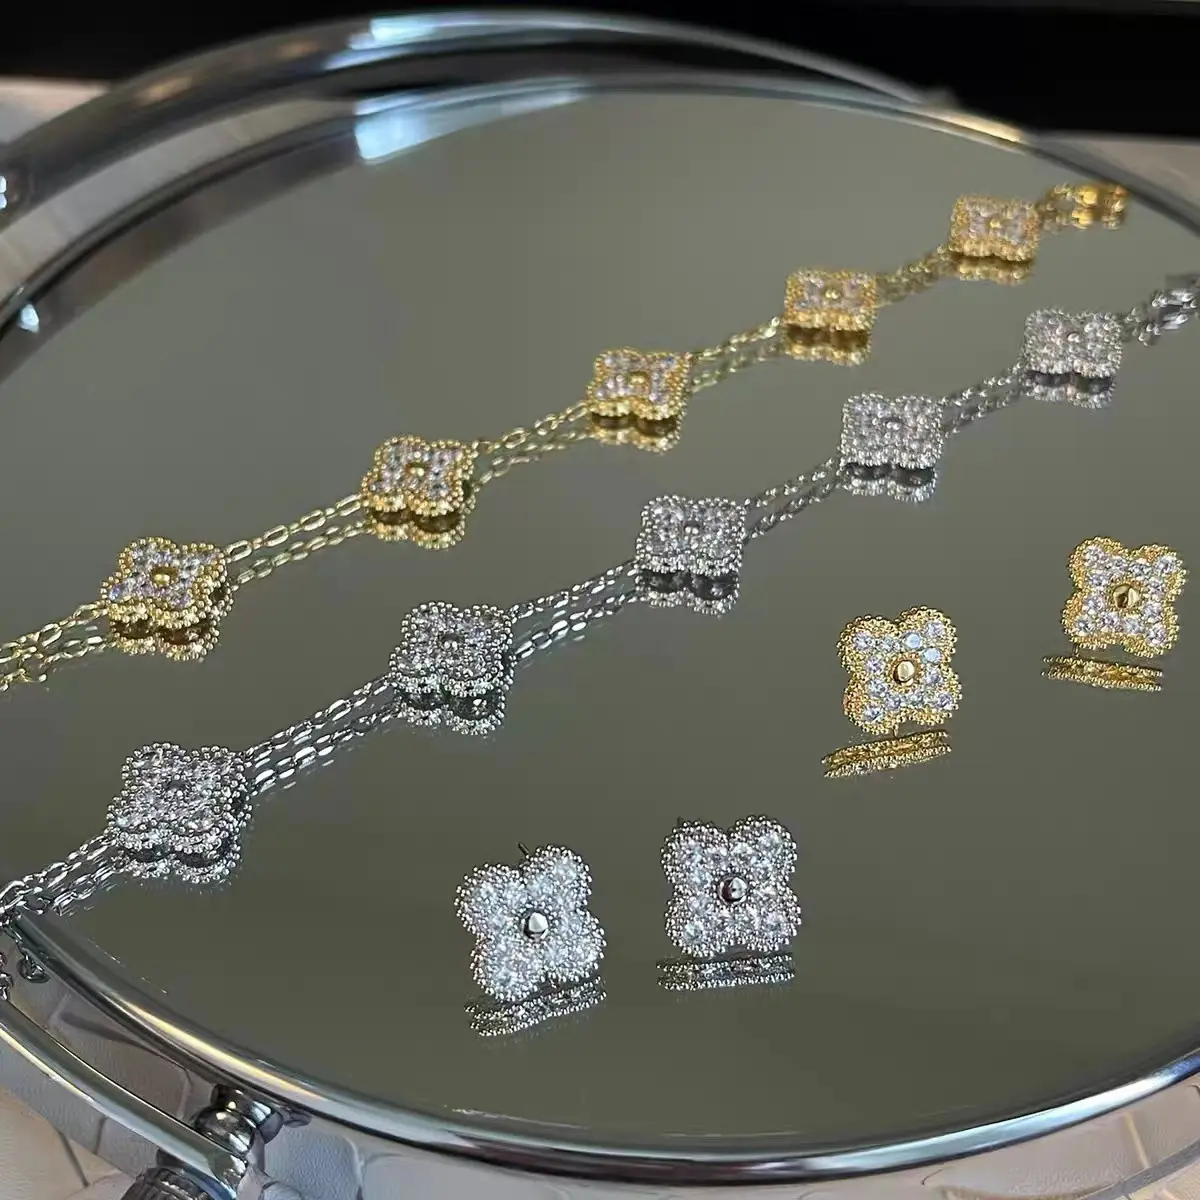 Gelang semanggi lima daun keberuntungan berlian dua sisi, perhiasan gelang baja tahan karat mewah ringan terkenal